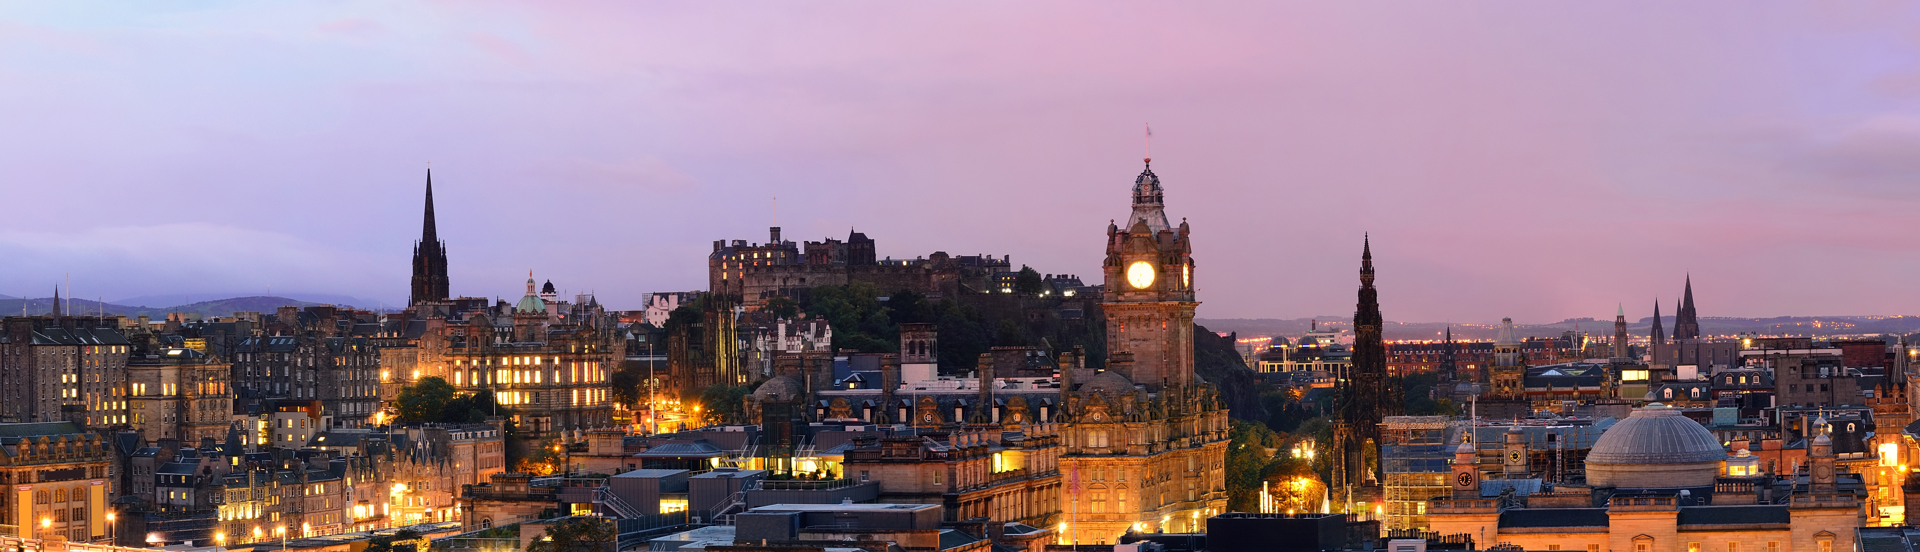 Edinburgh City View Panorama Night Uk